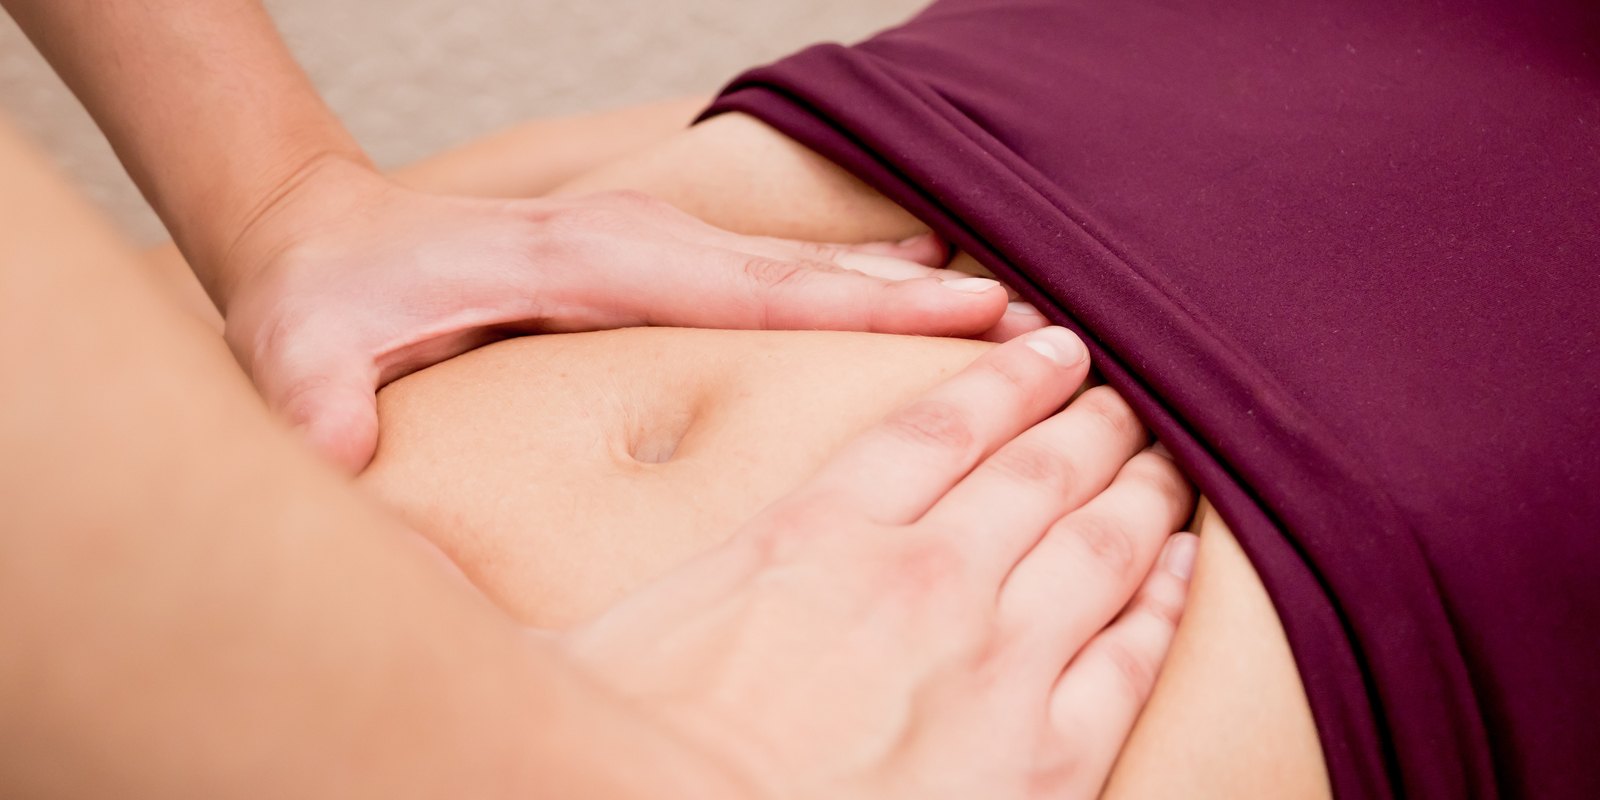 Pelvic floor therapist examining pelvic floor muscles of a woman